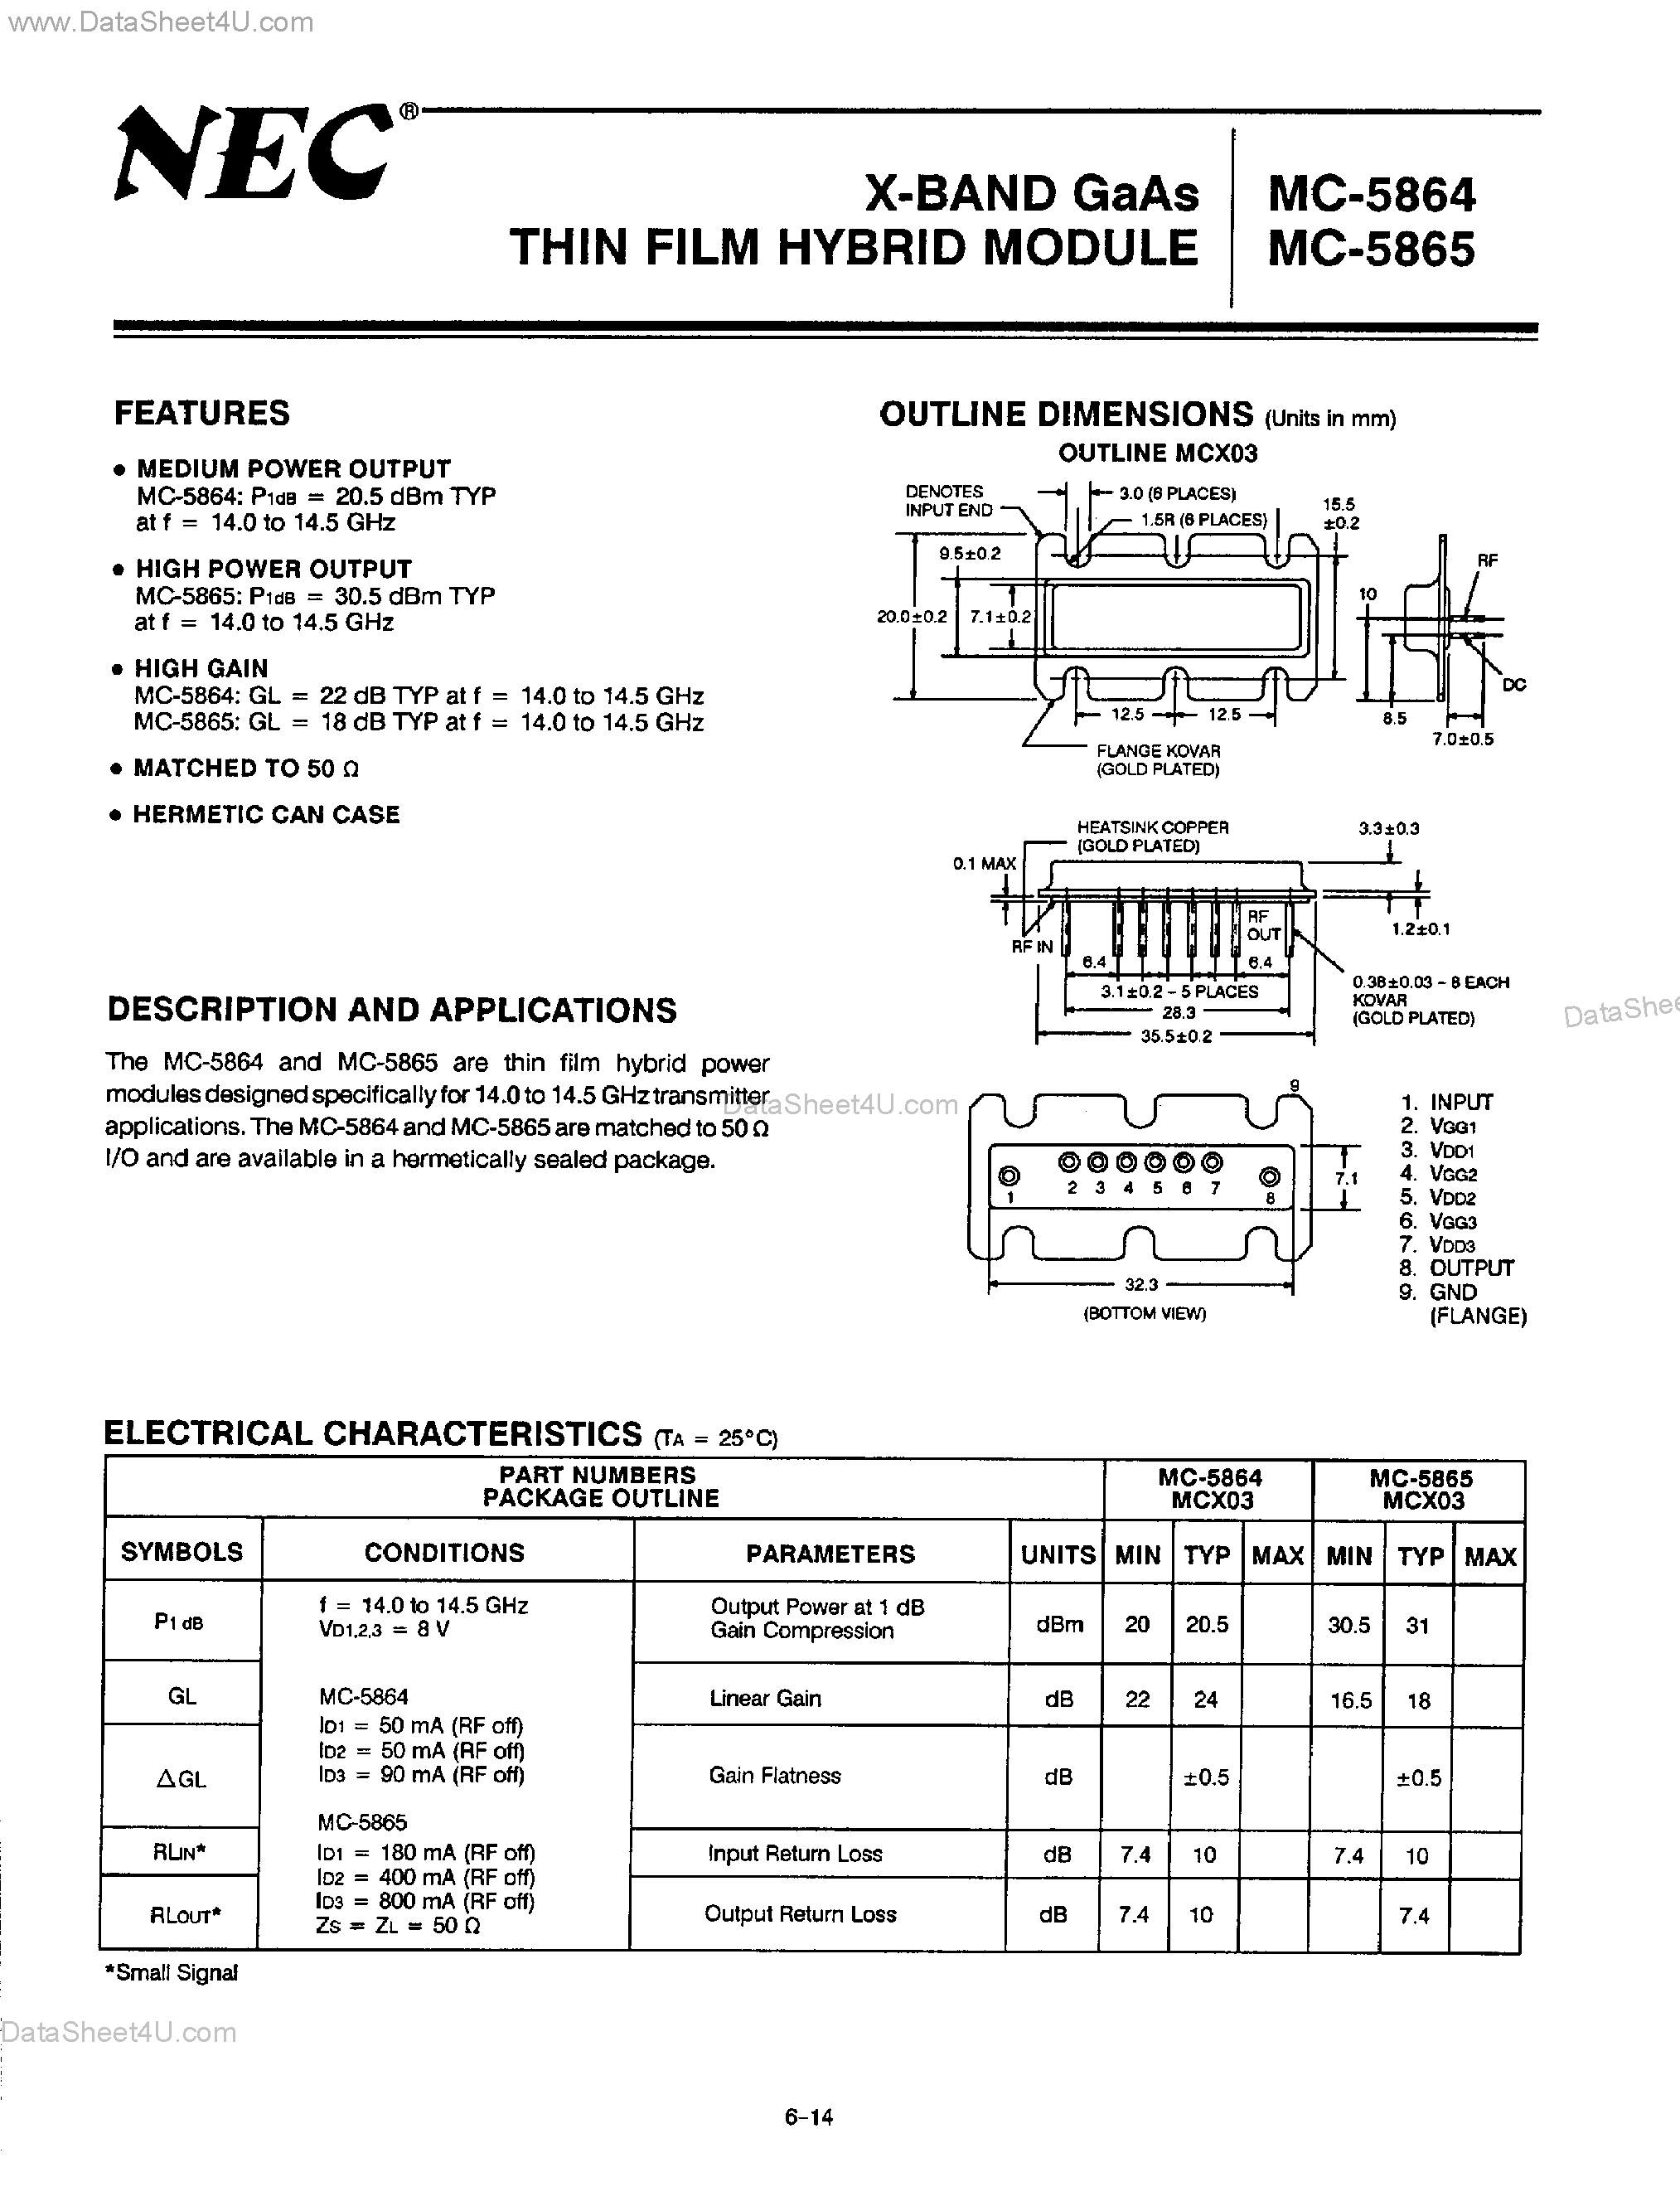 Даташит MC5864 - X-Band GaAs Thin Film Hybrid Module страница 1